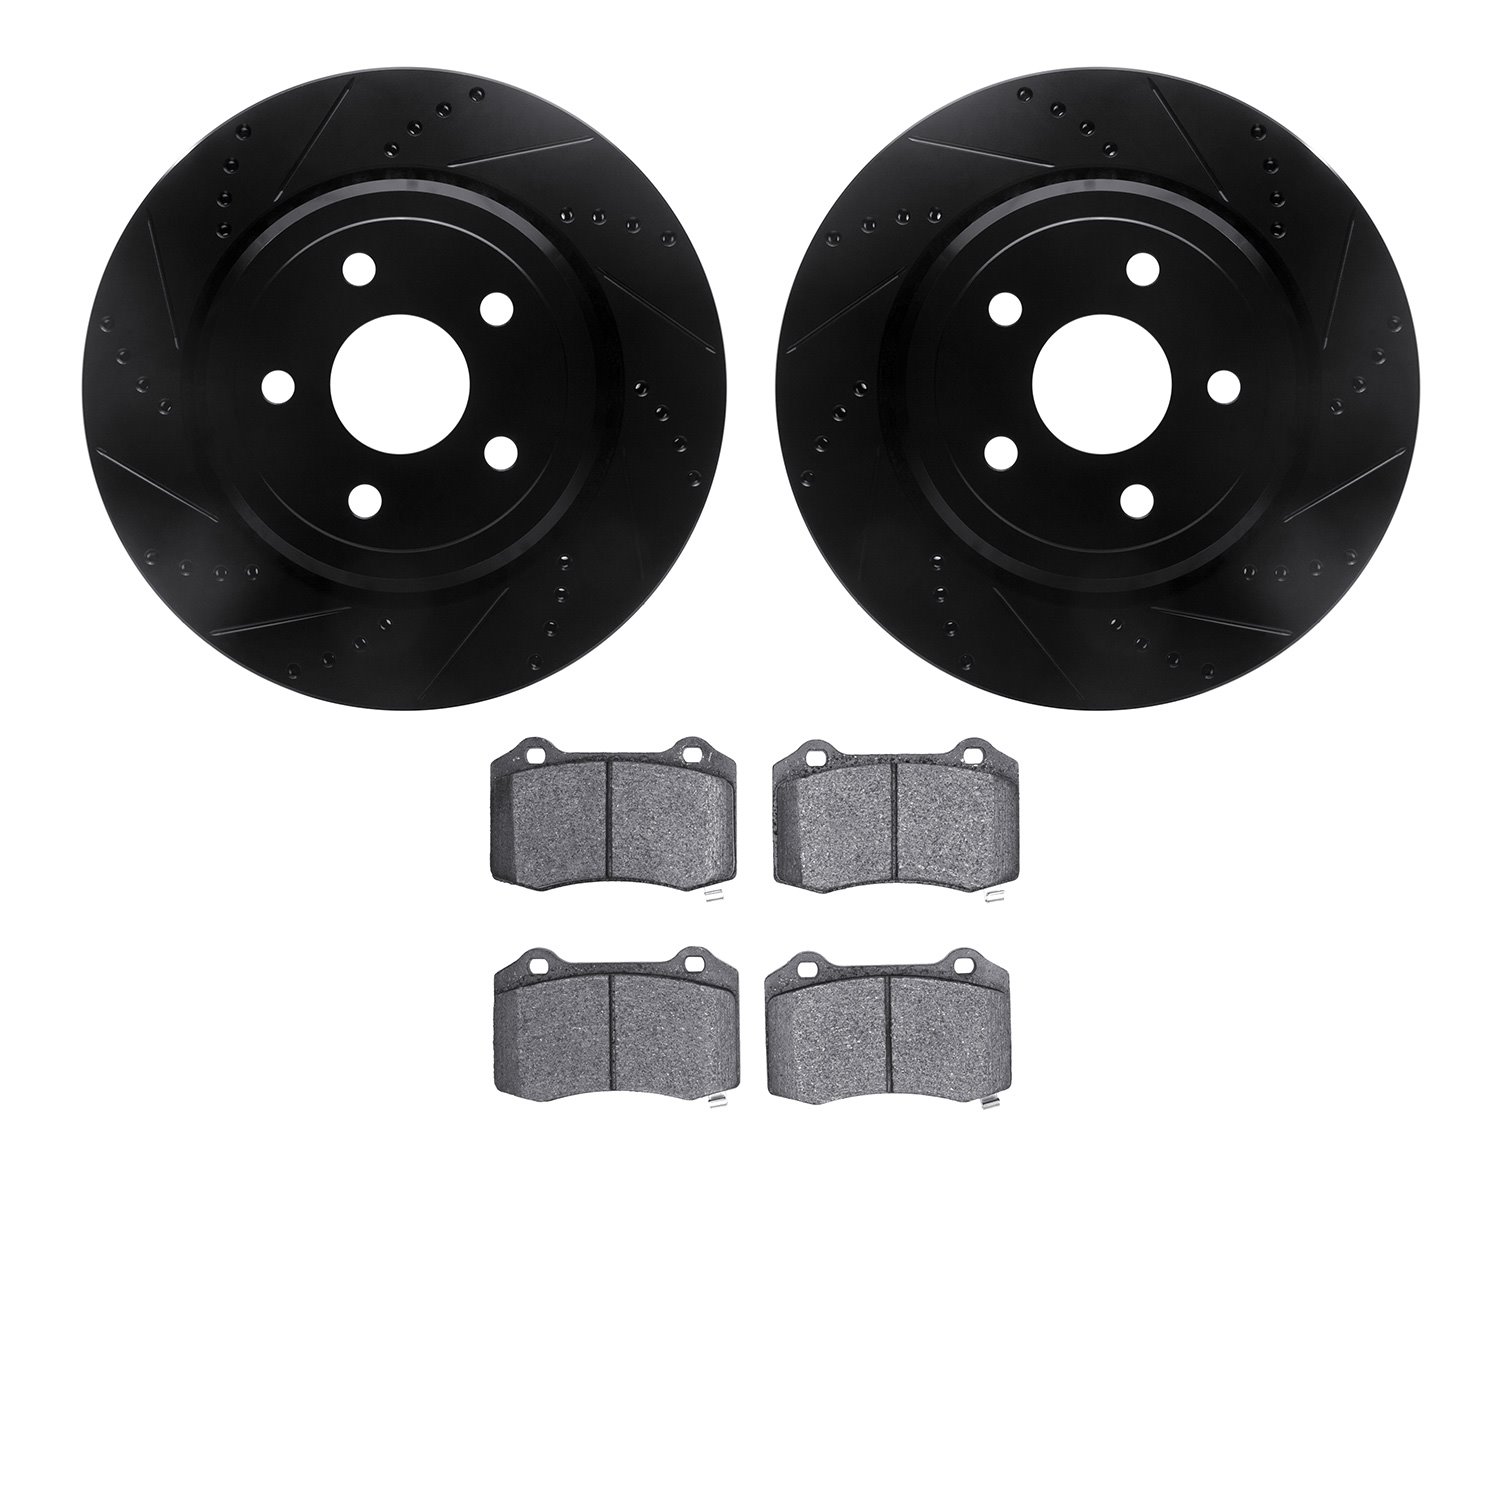 8302-42025 Drilled/Slotted Brake Rotors with 3000-Series Ceramic Brake Pads Kit [Black], Fits Select Mopar, Position: Rear